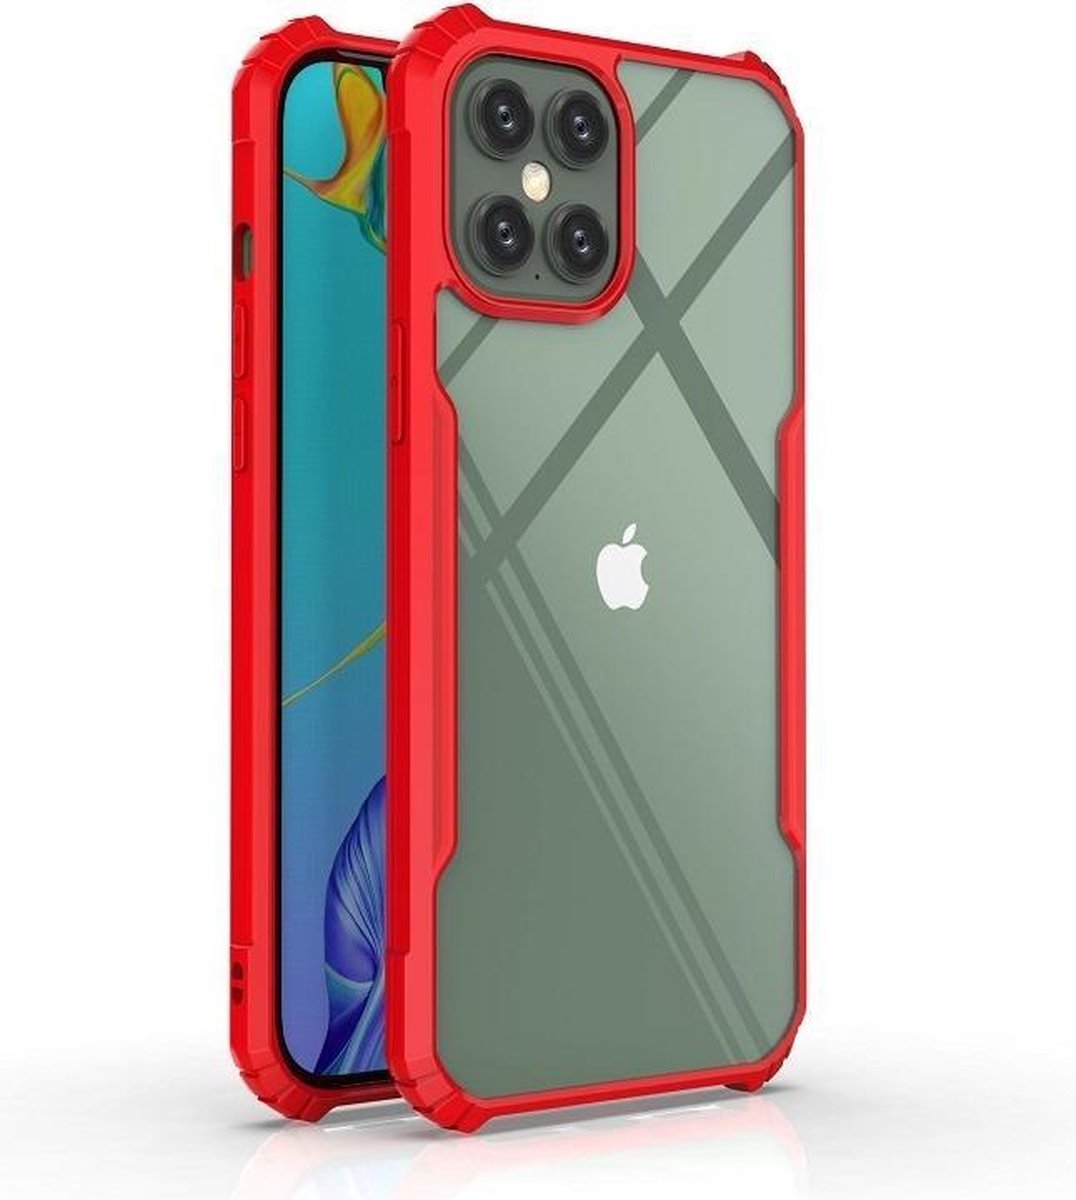 Hoesje geschikt voor iPhone 11 Pro Max - Super Protect Slim Bumper - Back Cover - Rood/Transparant